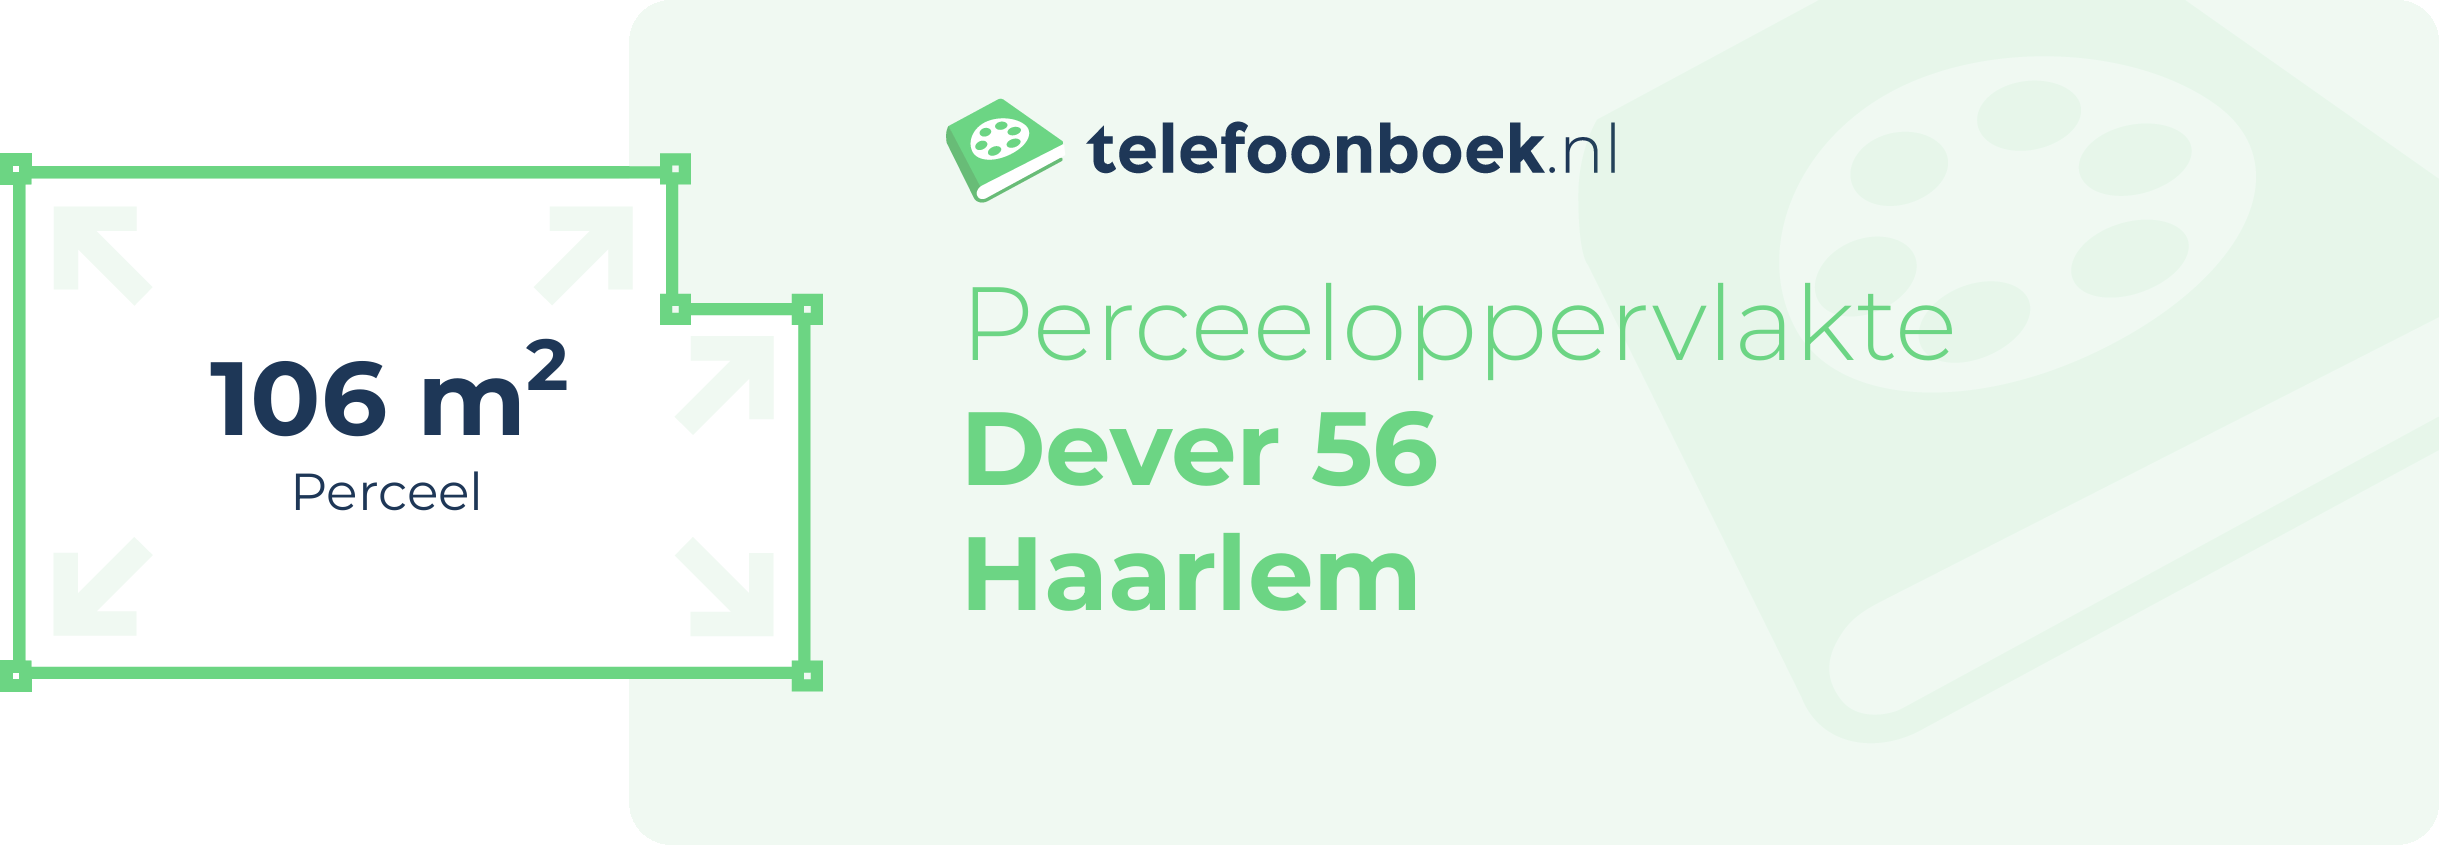 Perceeloppervlakte Dever 56 Haarlem